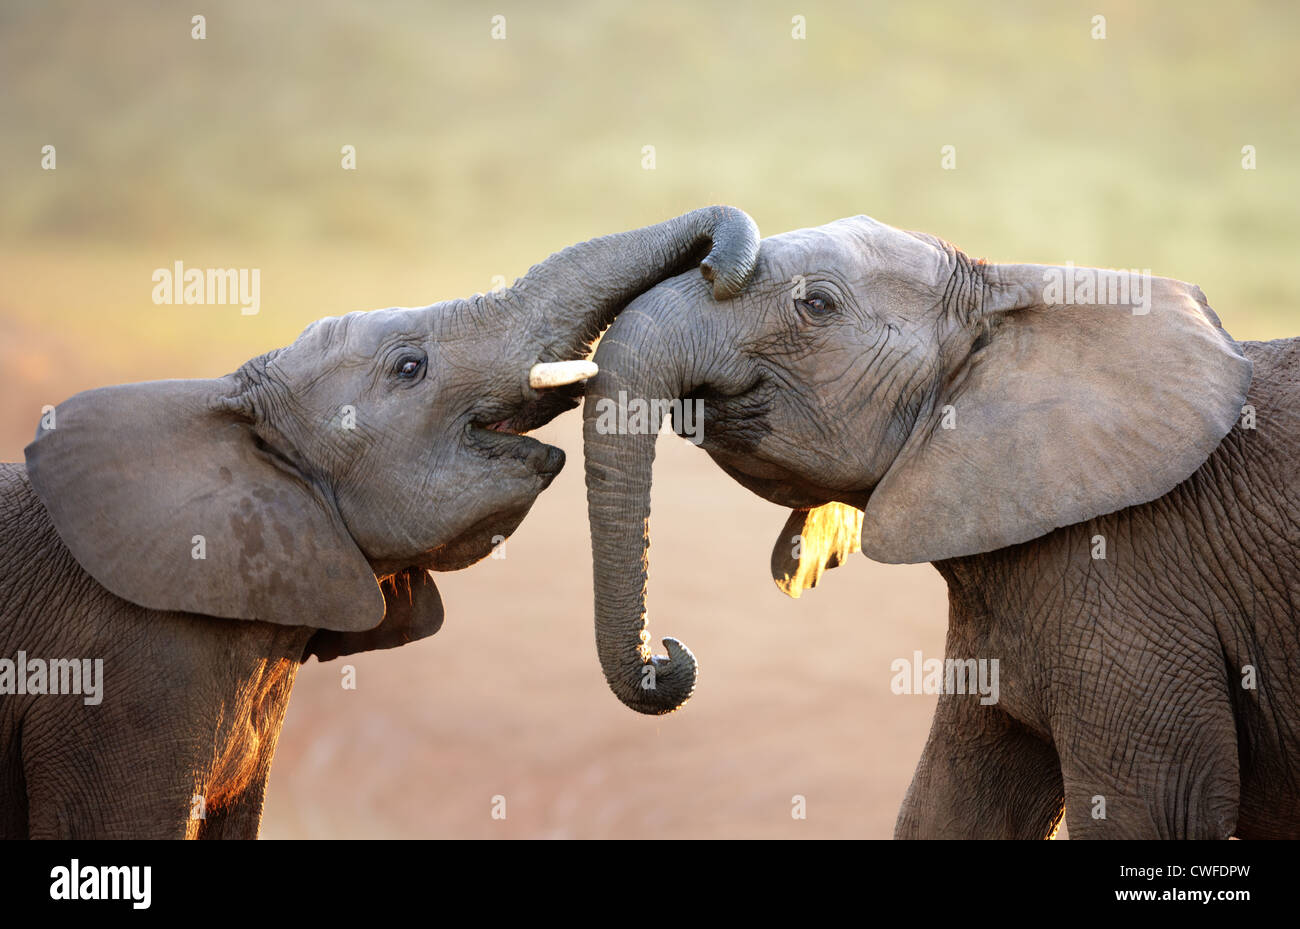 Los elefantes se tocan suavemente (saludo) - Parque Nacional de Elefantes Addo - Sudáfrica Foto de stock